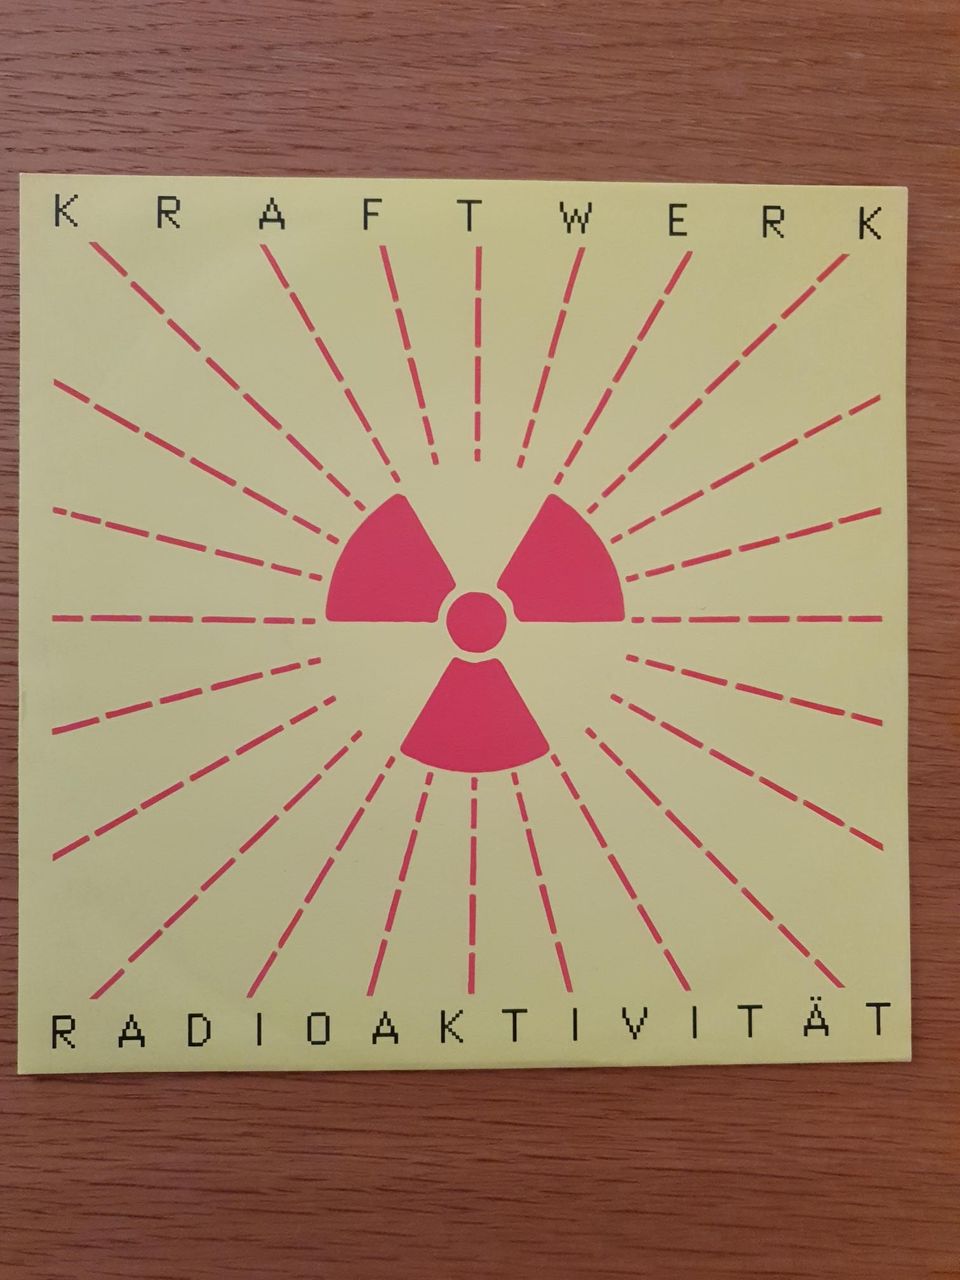 Kraftwerk - Radioaktivität - 7" sinkku